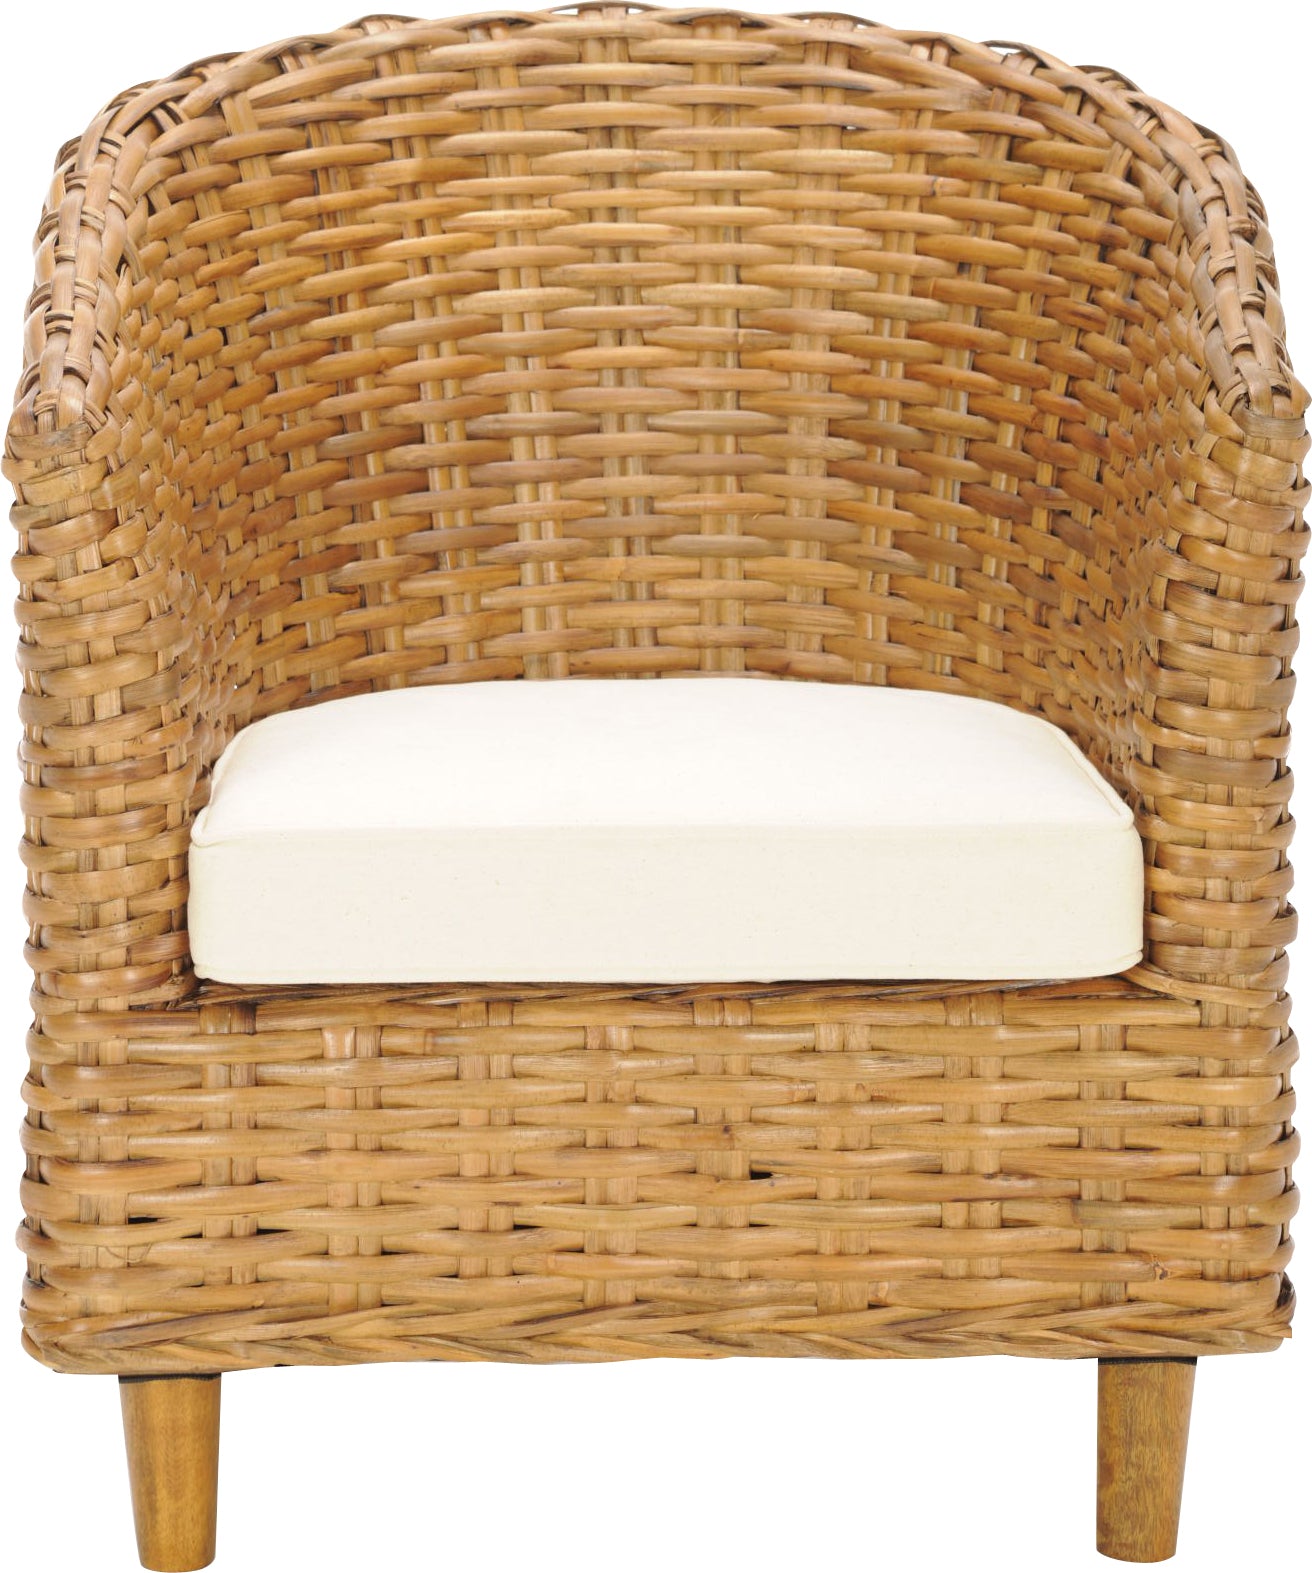 Safavieh Omni Rattan Barrel Chair Honey and White Furniture main image